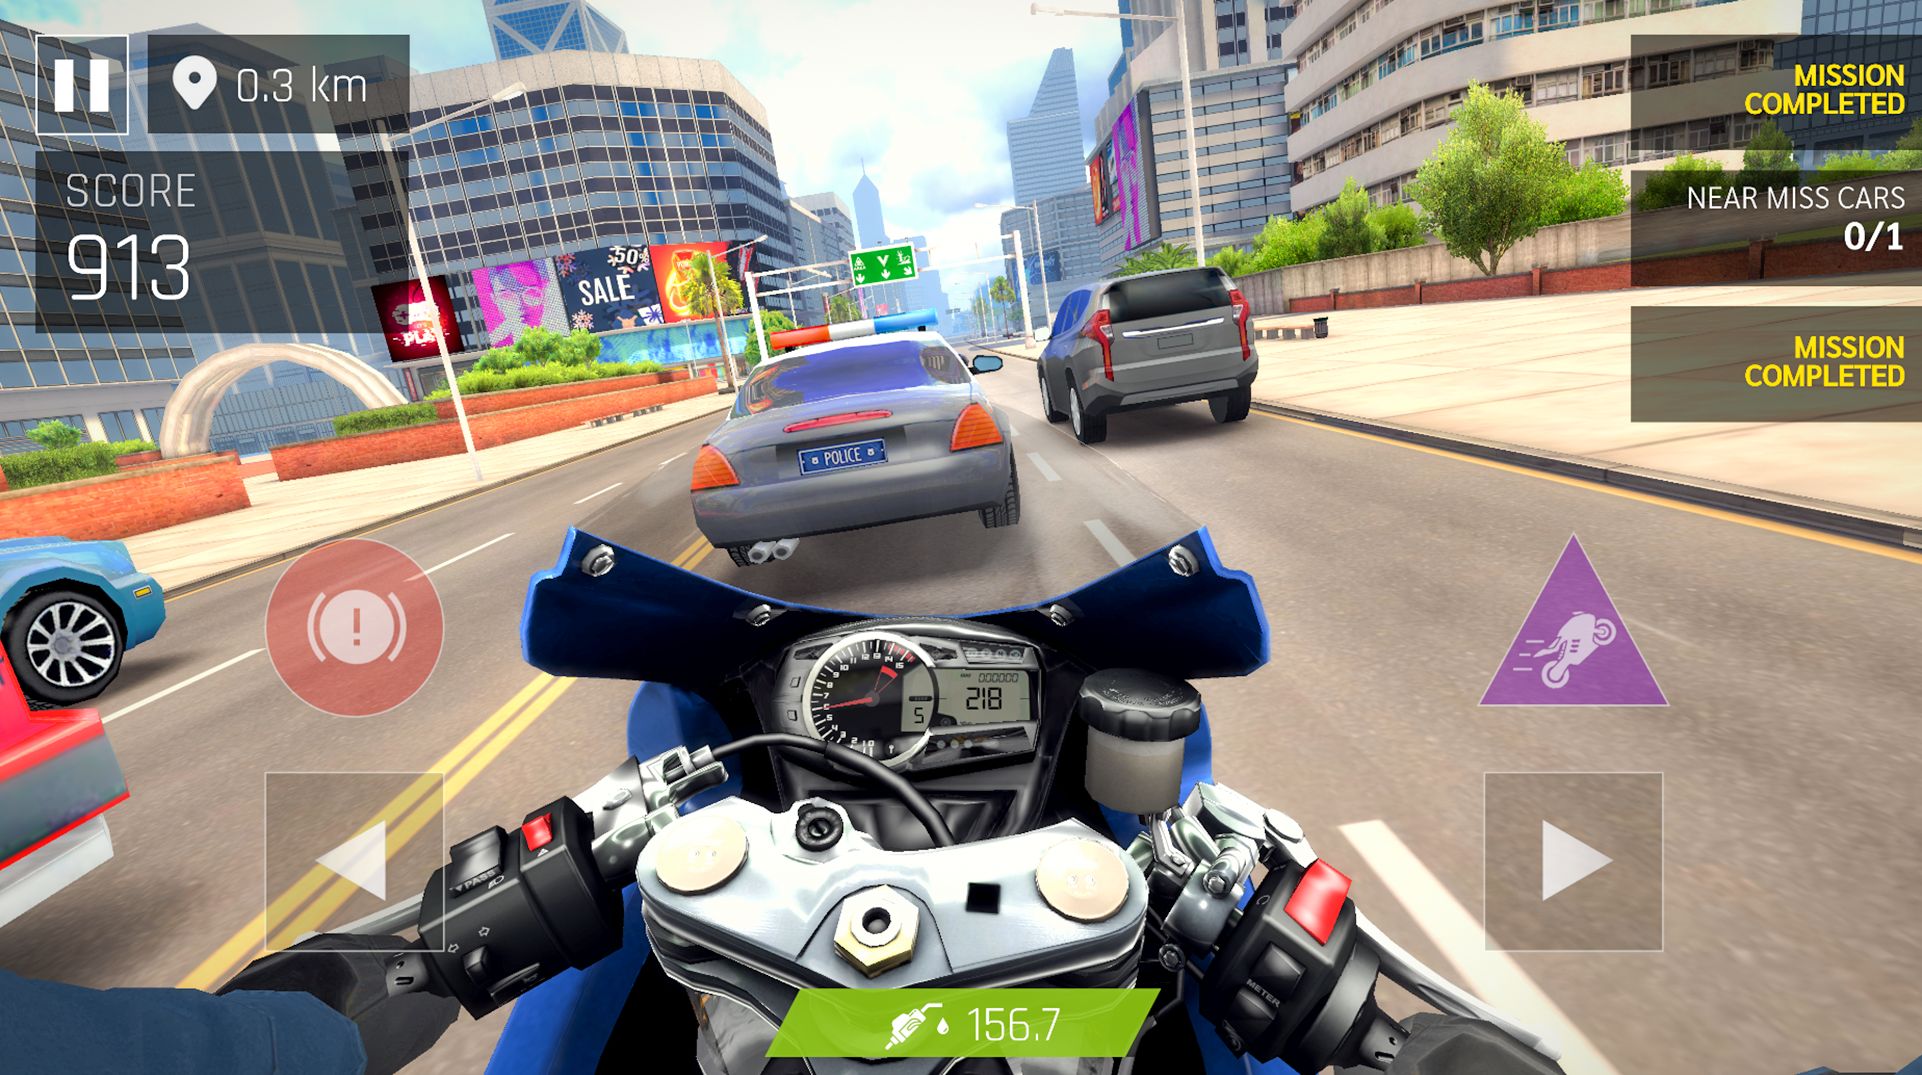 Download Real Moto Rider: Traffic Race für Android kostenlos.